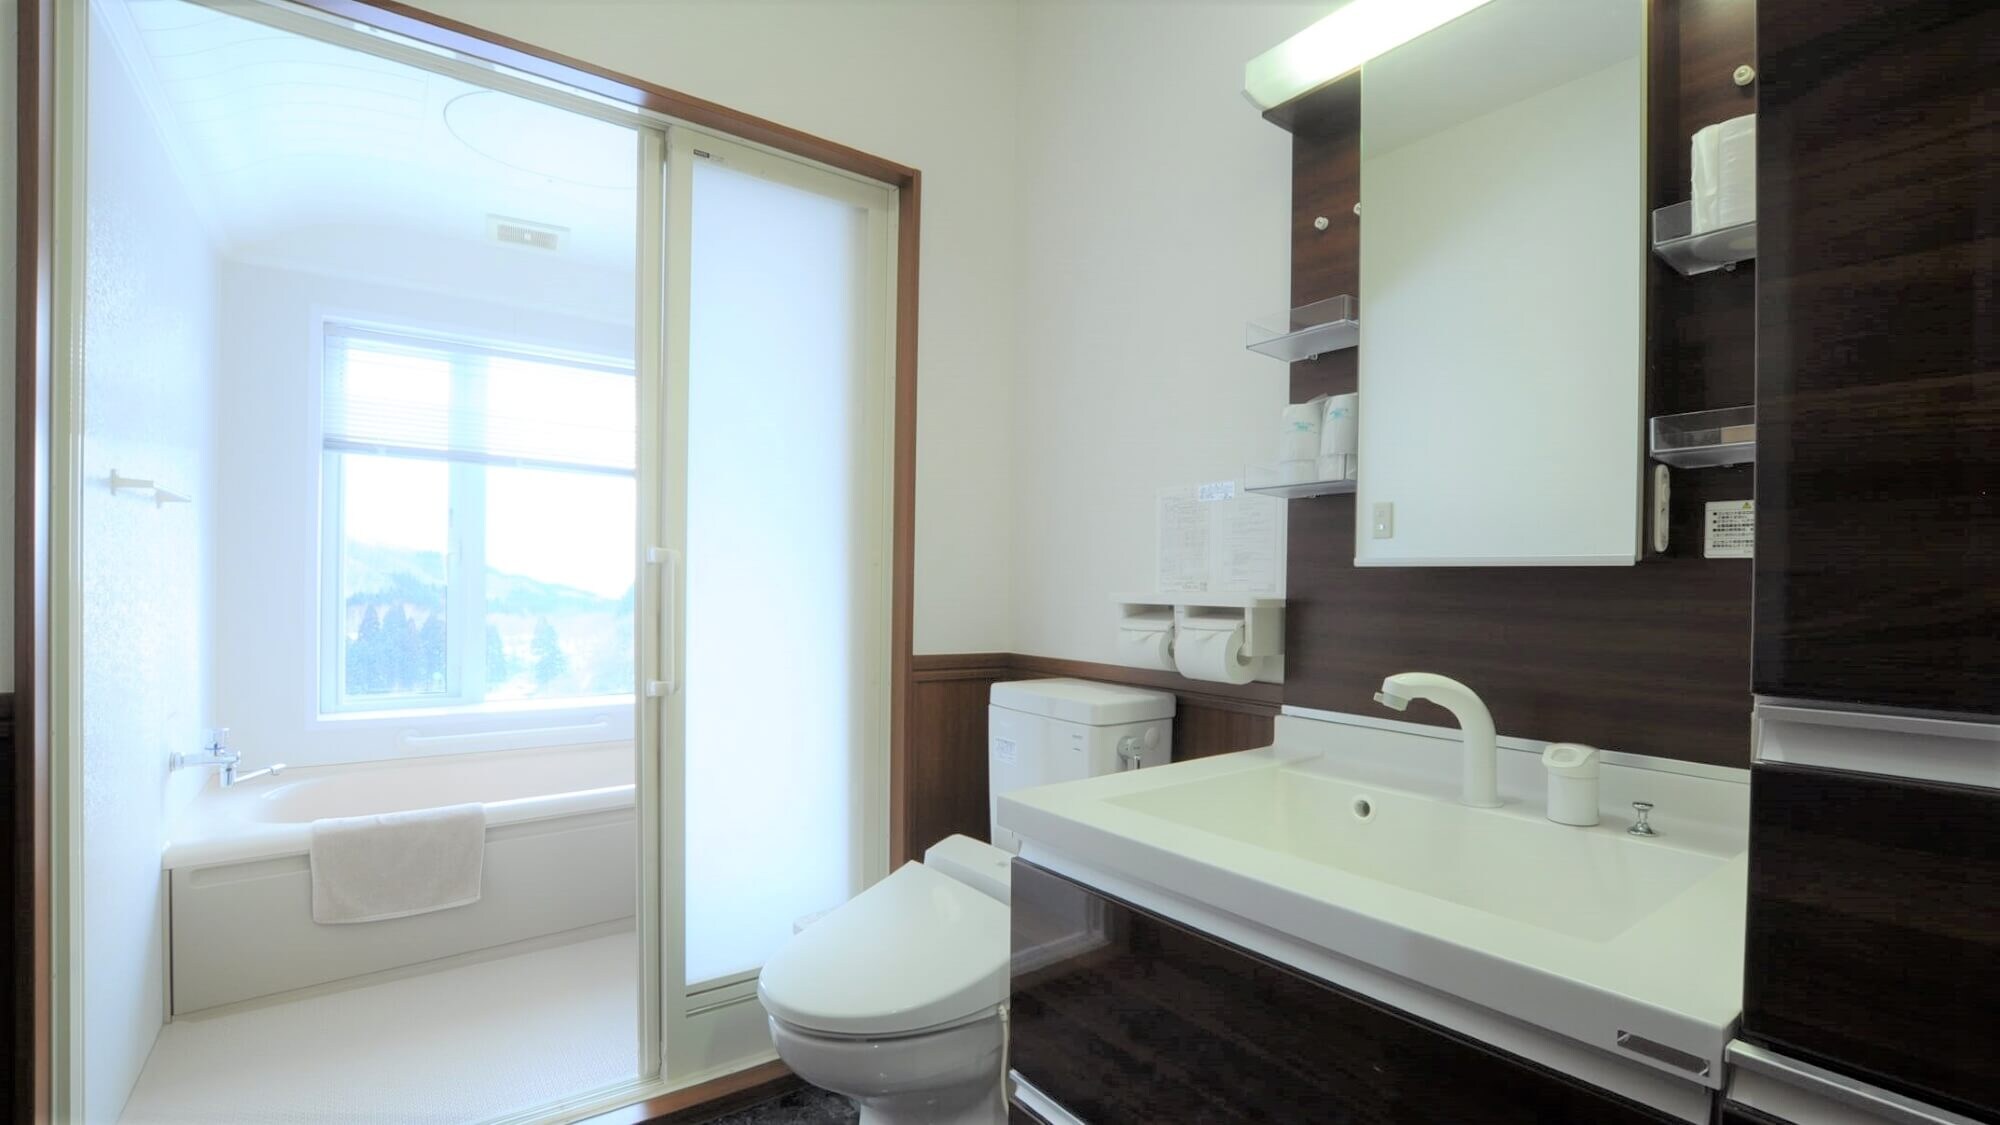 ■ Special Japanese and Western room "Kaze" bathroom